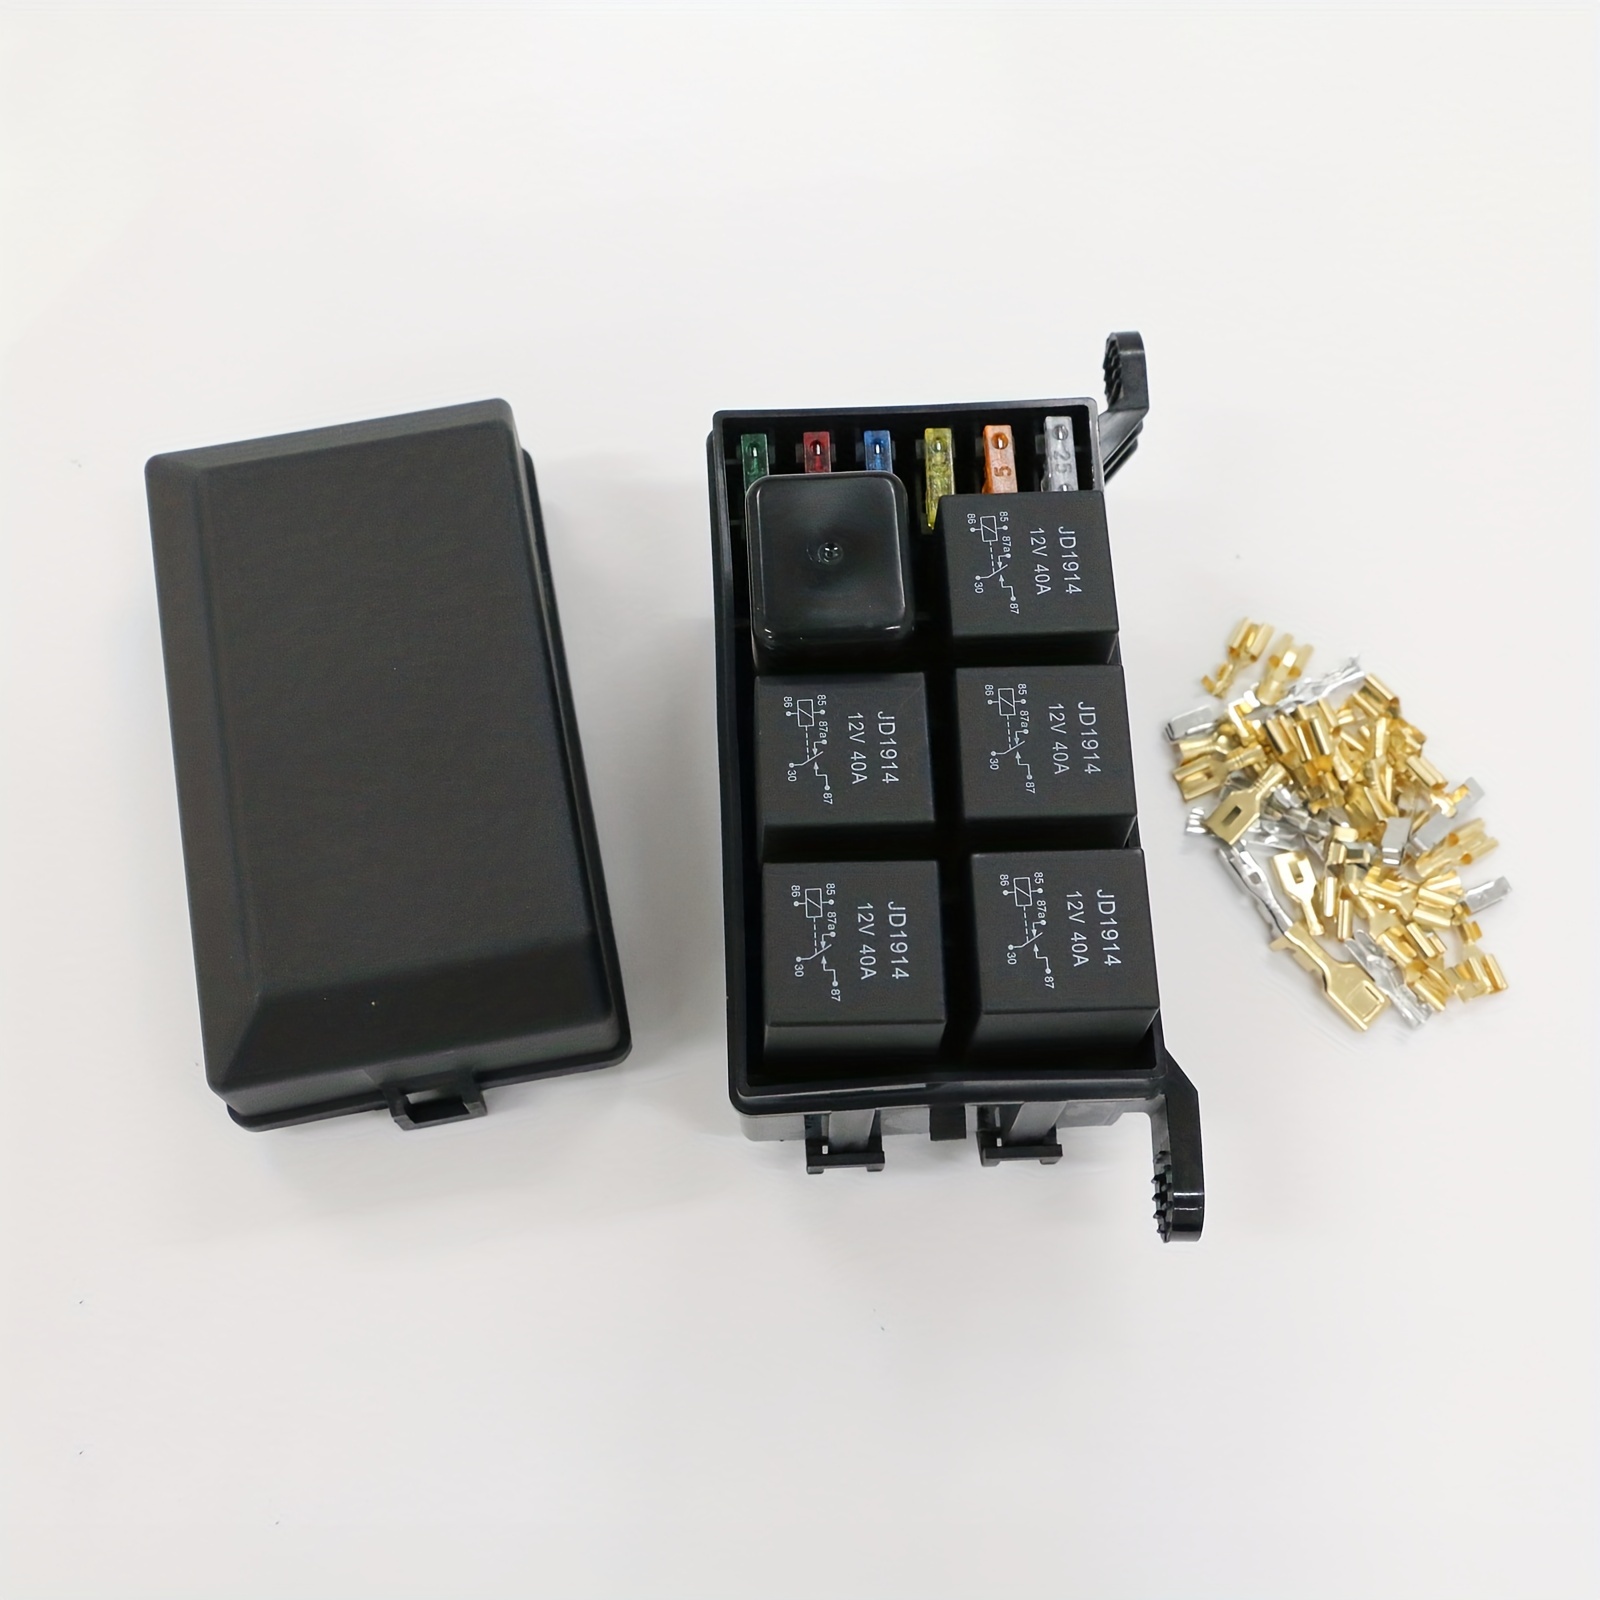  Bloque de caja de relé de fusibles impermeable de 12 V [6  soportes de relé estilo Bosch] [6 soportes de fusibles ATC/ATO] caja de  bloque de relé universal para vehículos automotrices